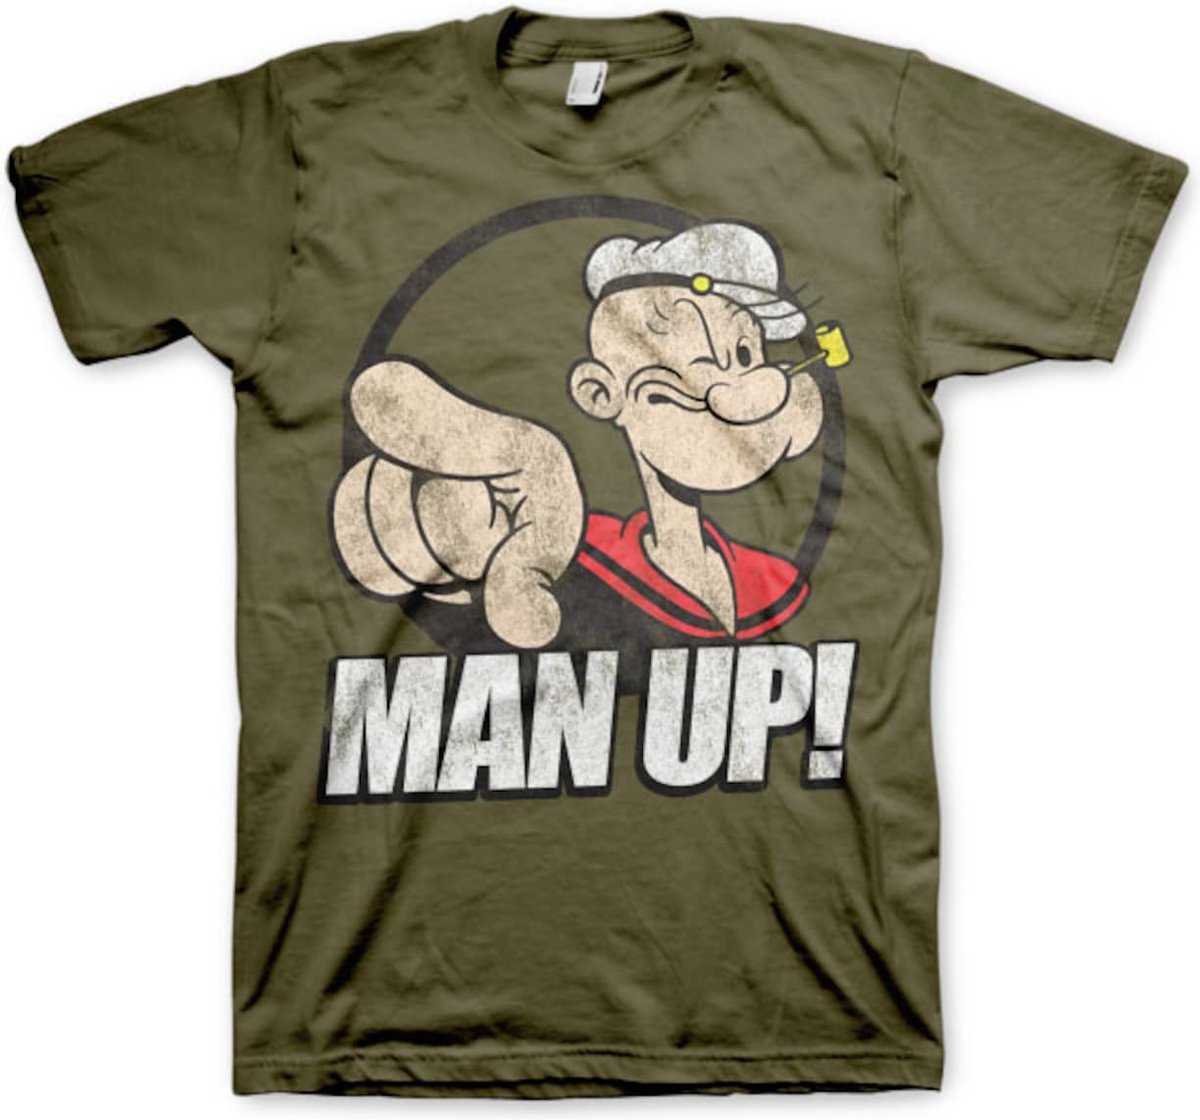 Popeye Shirt – Man Up! Maat 2XL